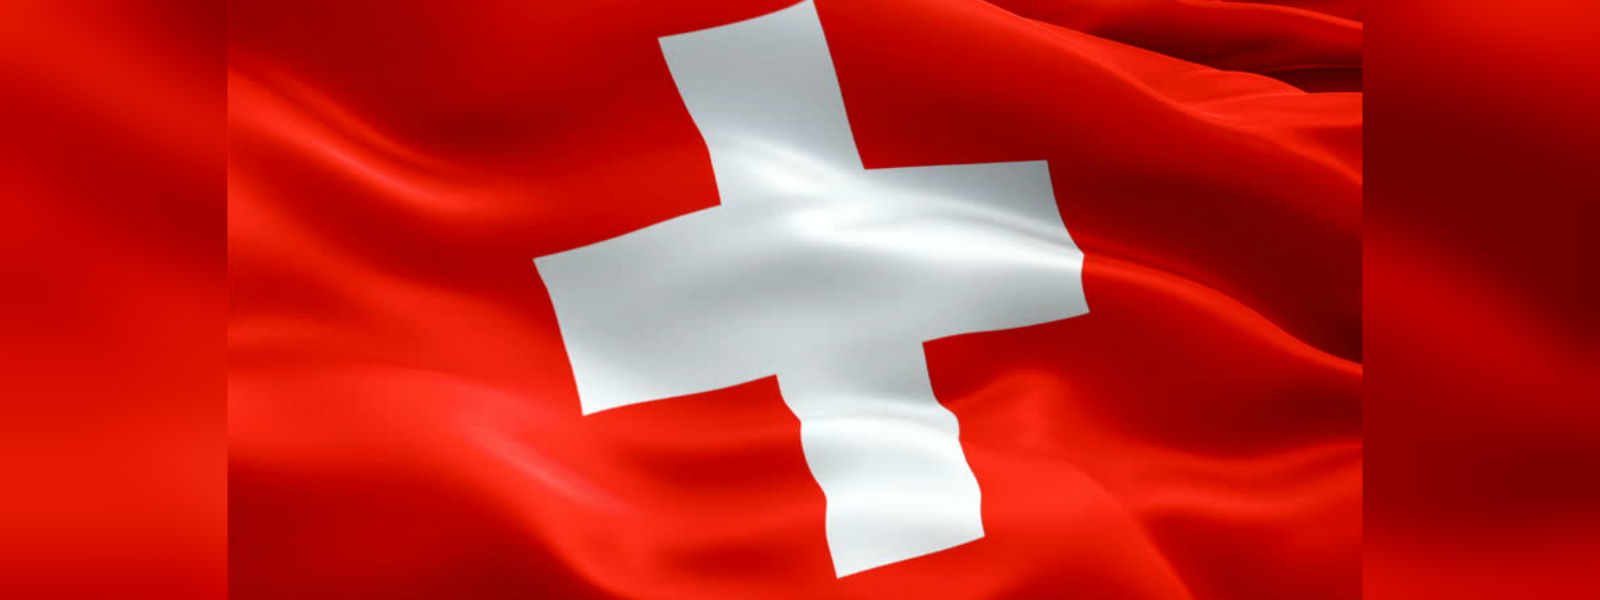 Swiss Embassy staffer arrested